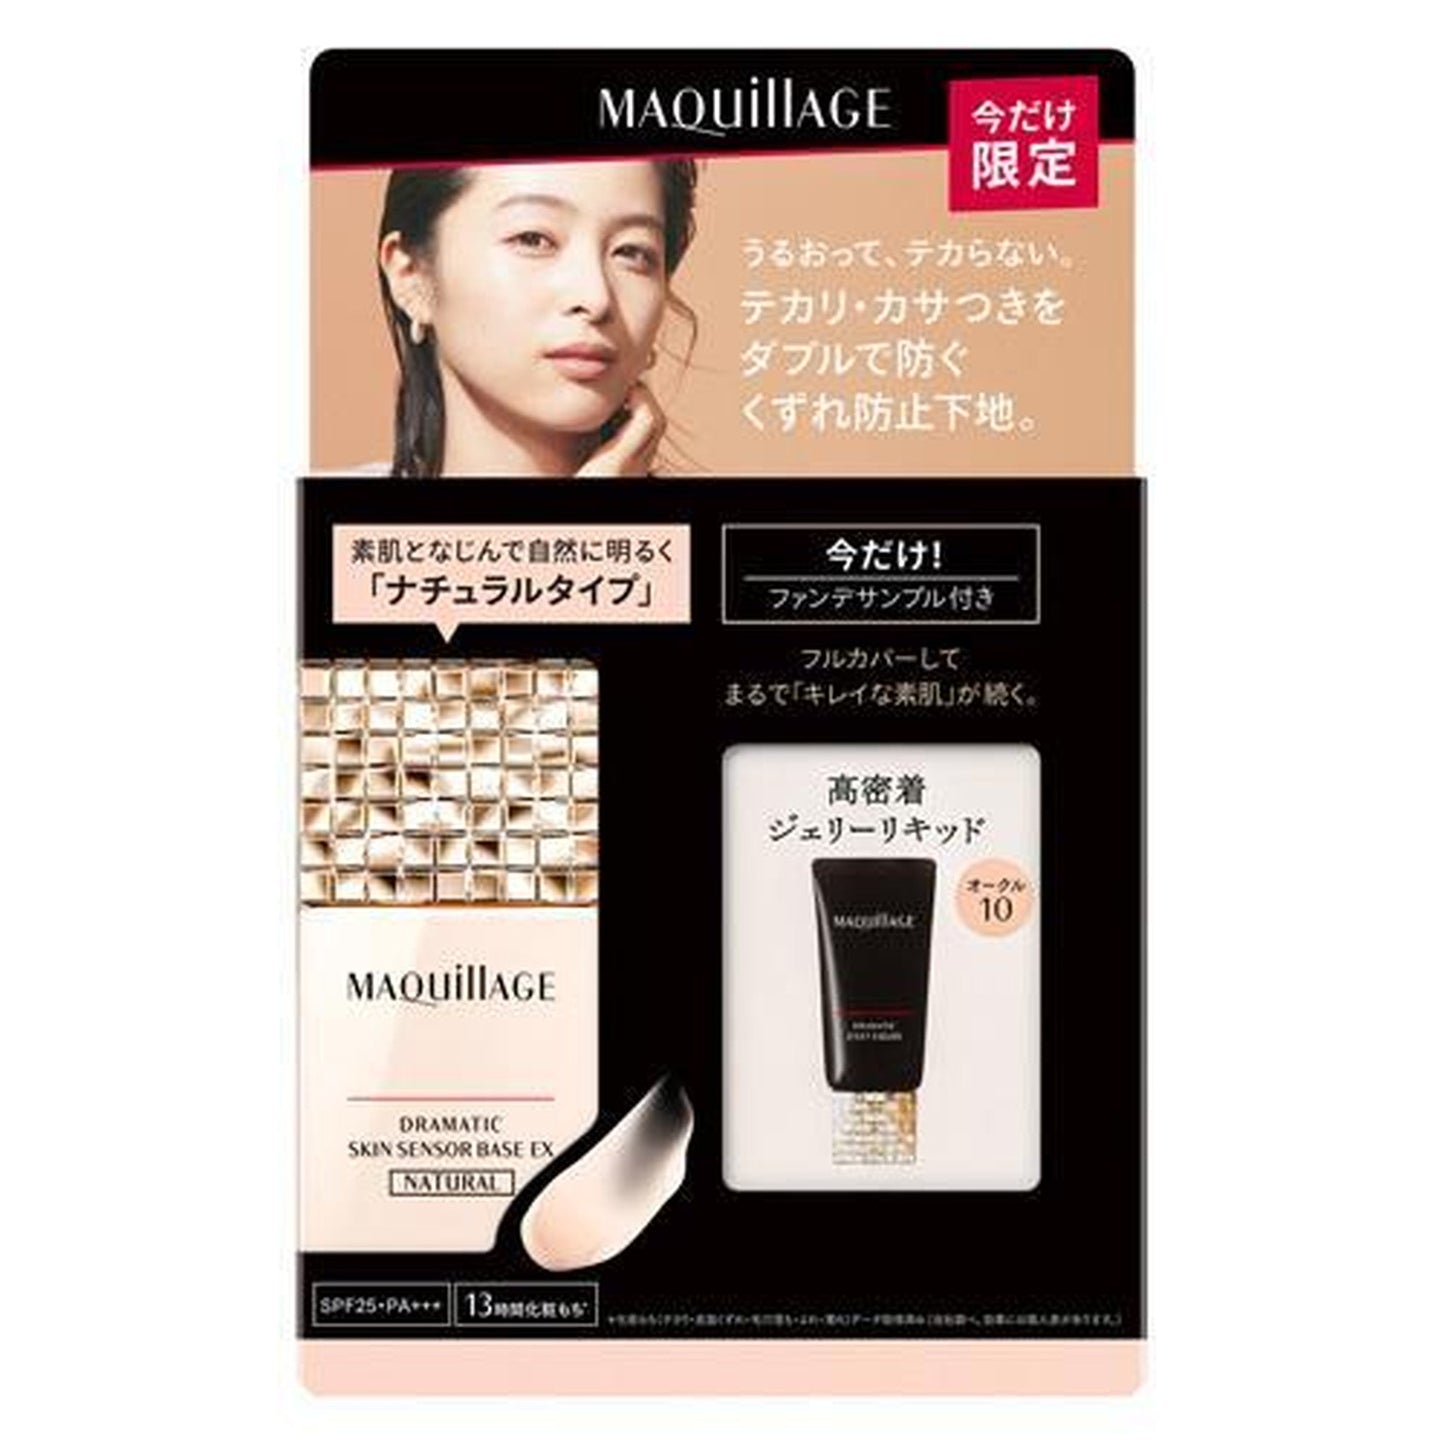 Shiseido MAQuillAGE Dramatic Skin Sensor Base EX L2 Natural (1 set)